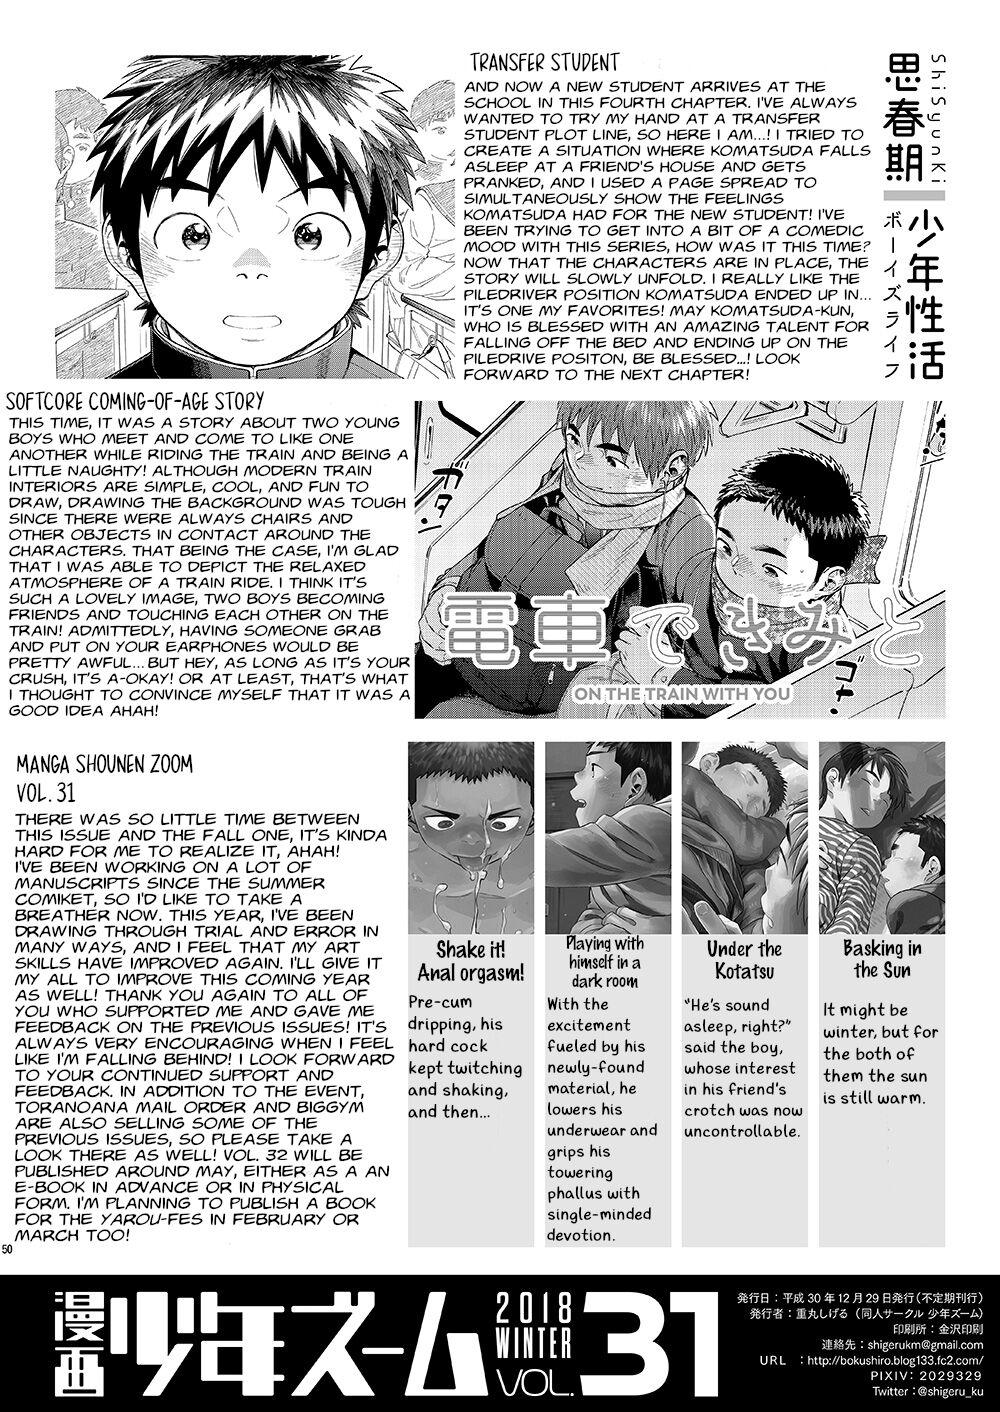 Manga Shounen Zoom Vol. 31 48